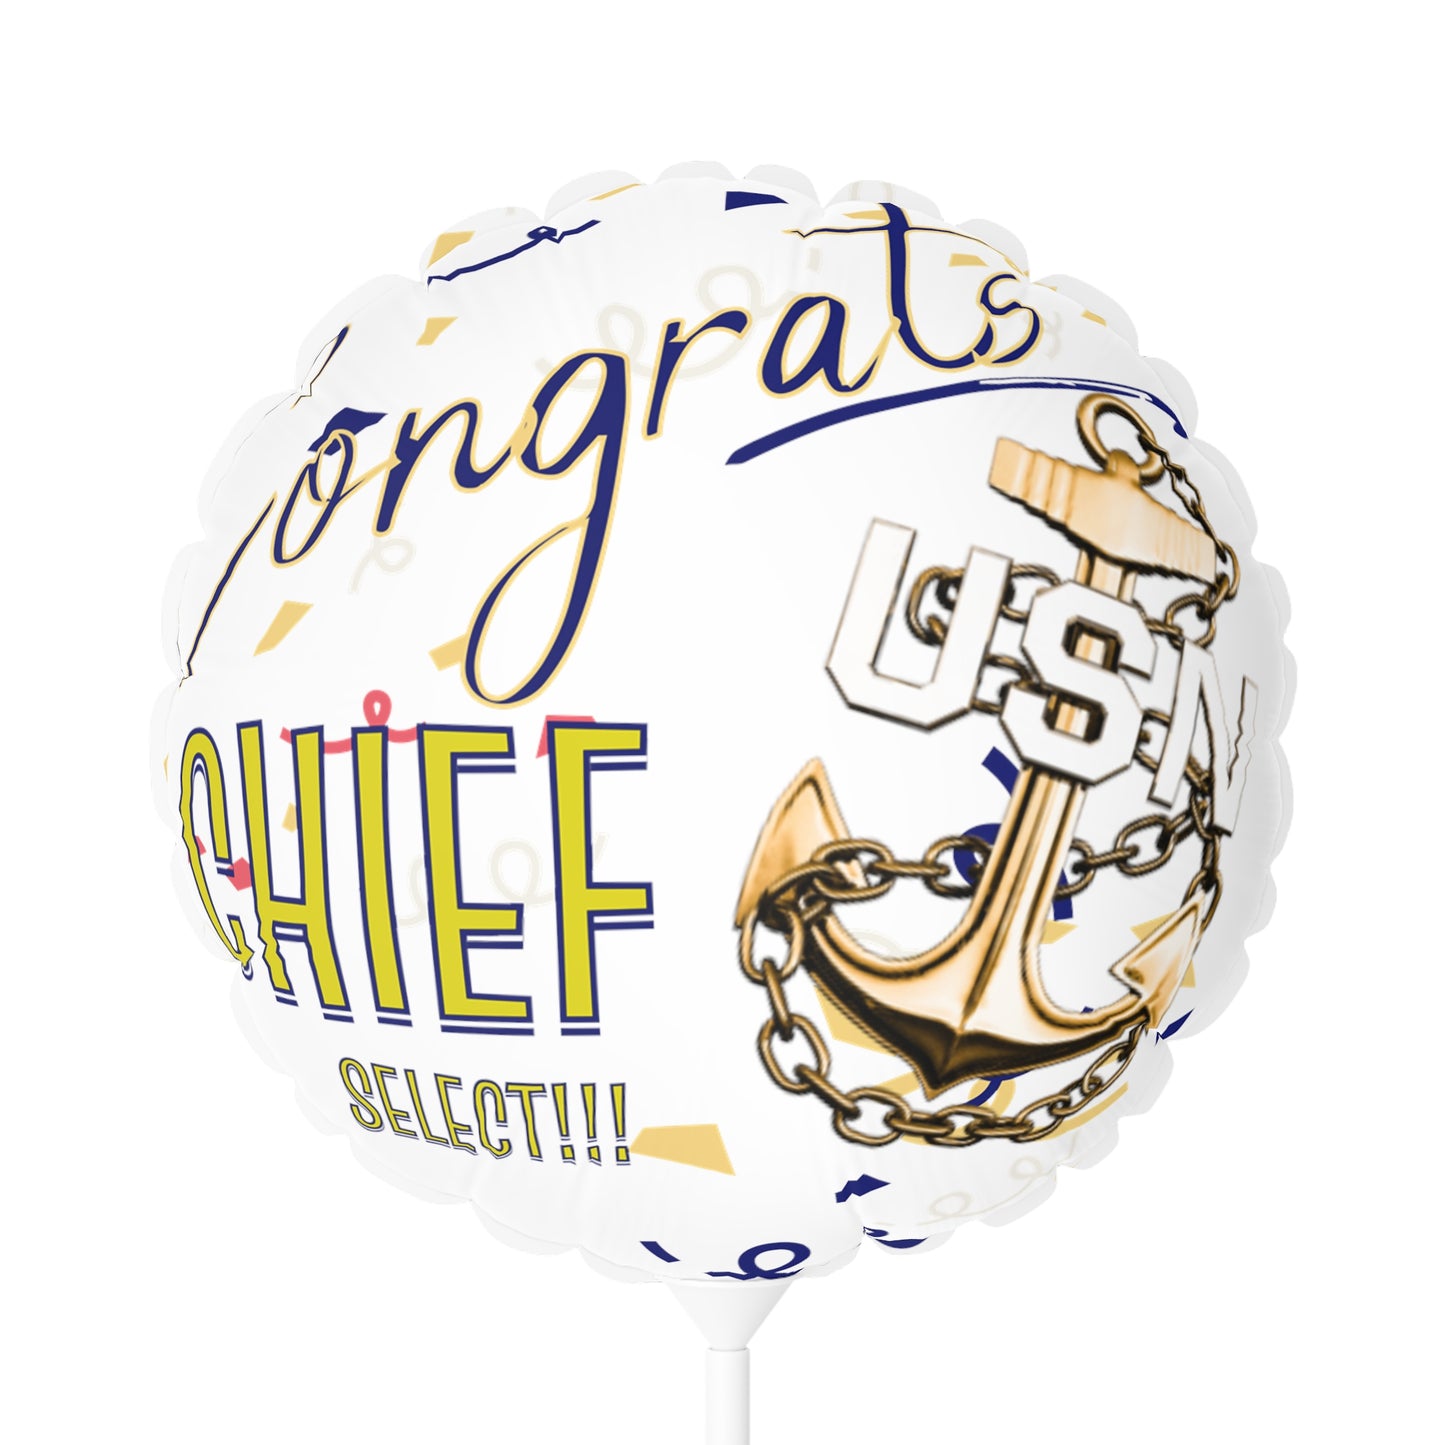 Congratulations Chief Select!!!